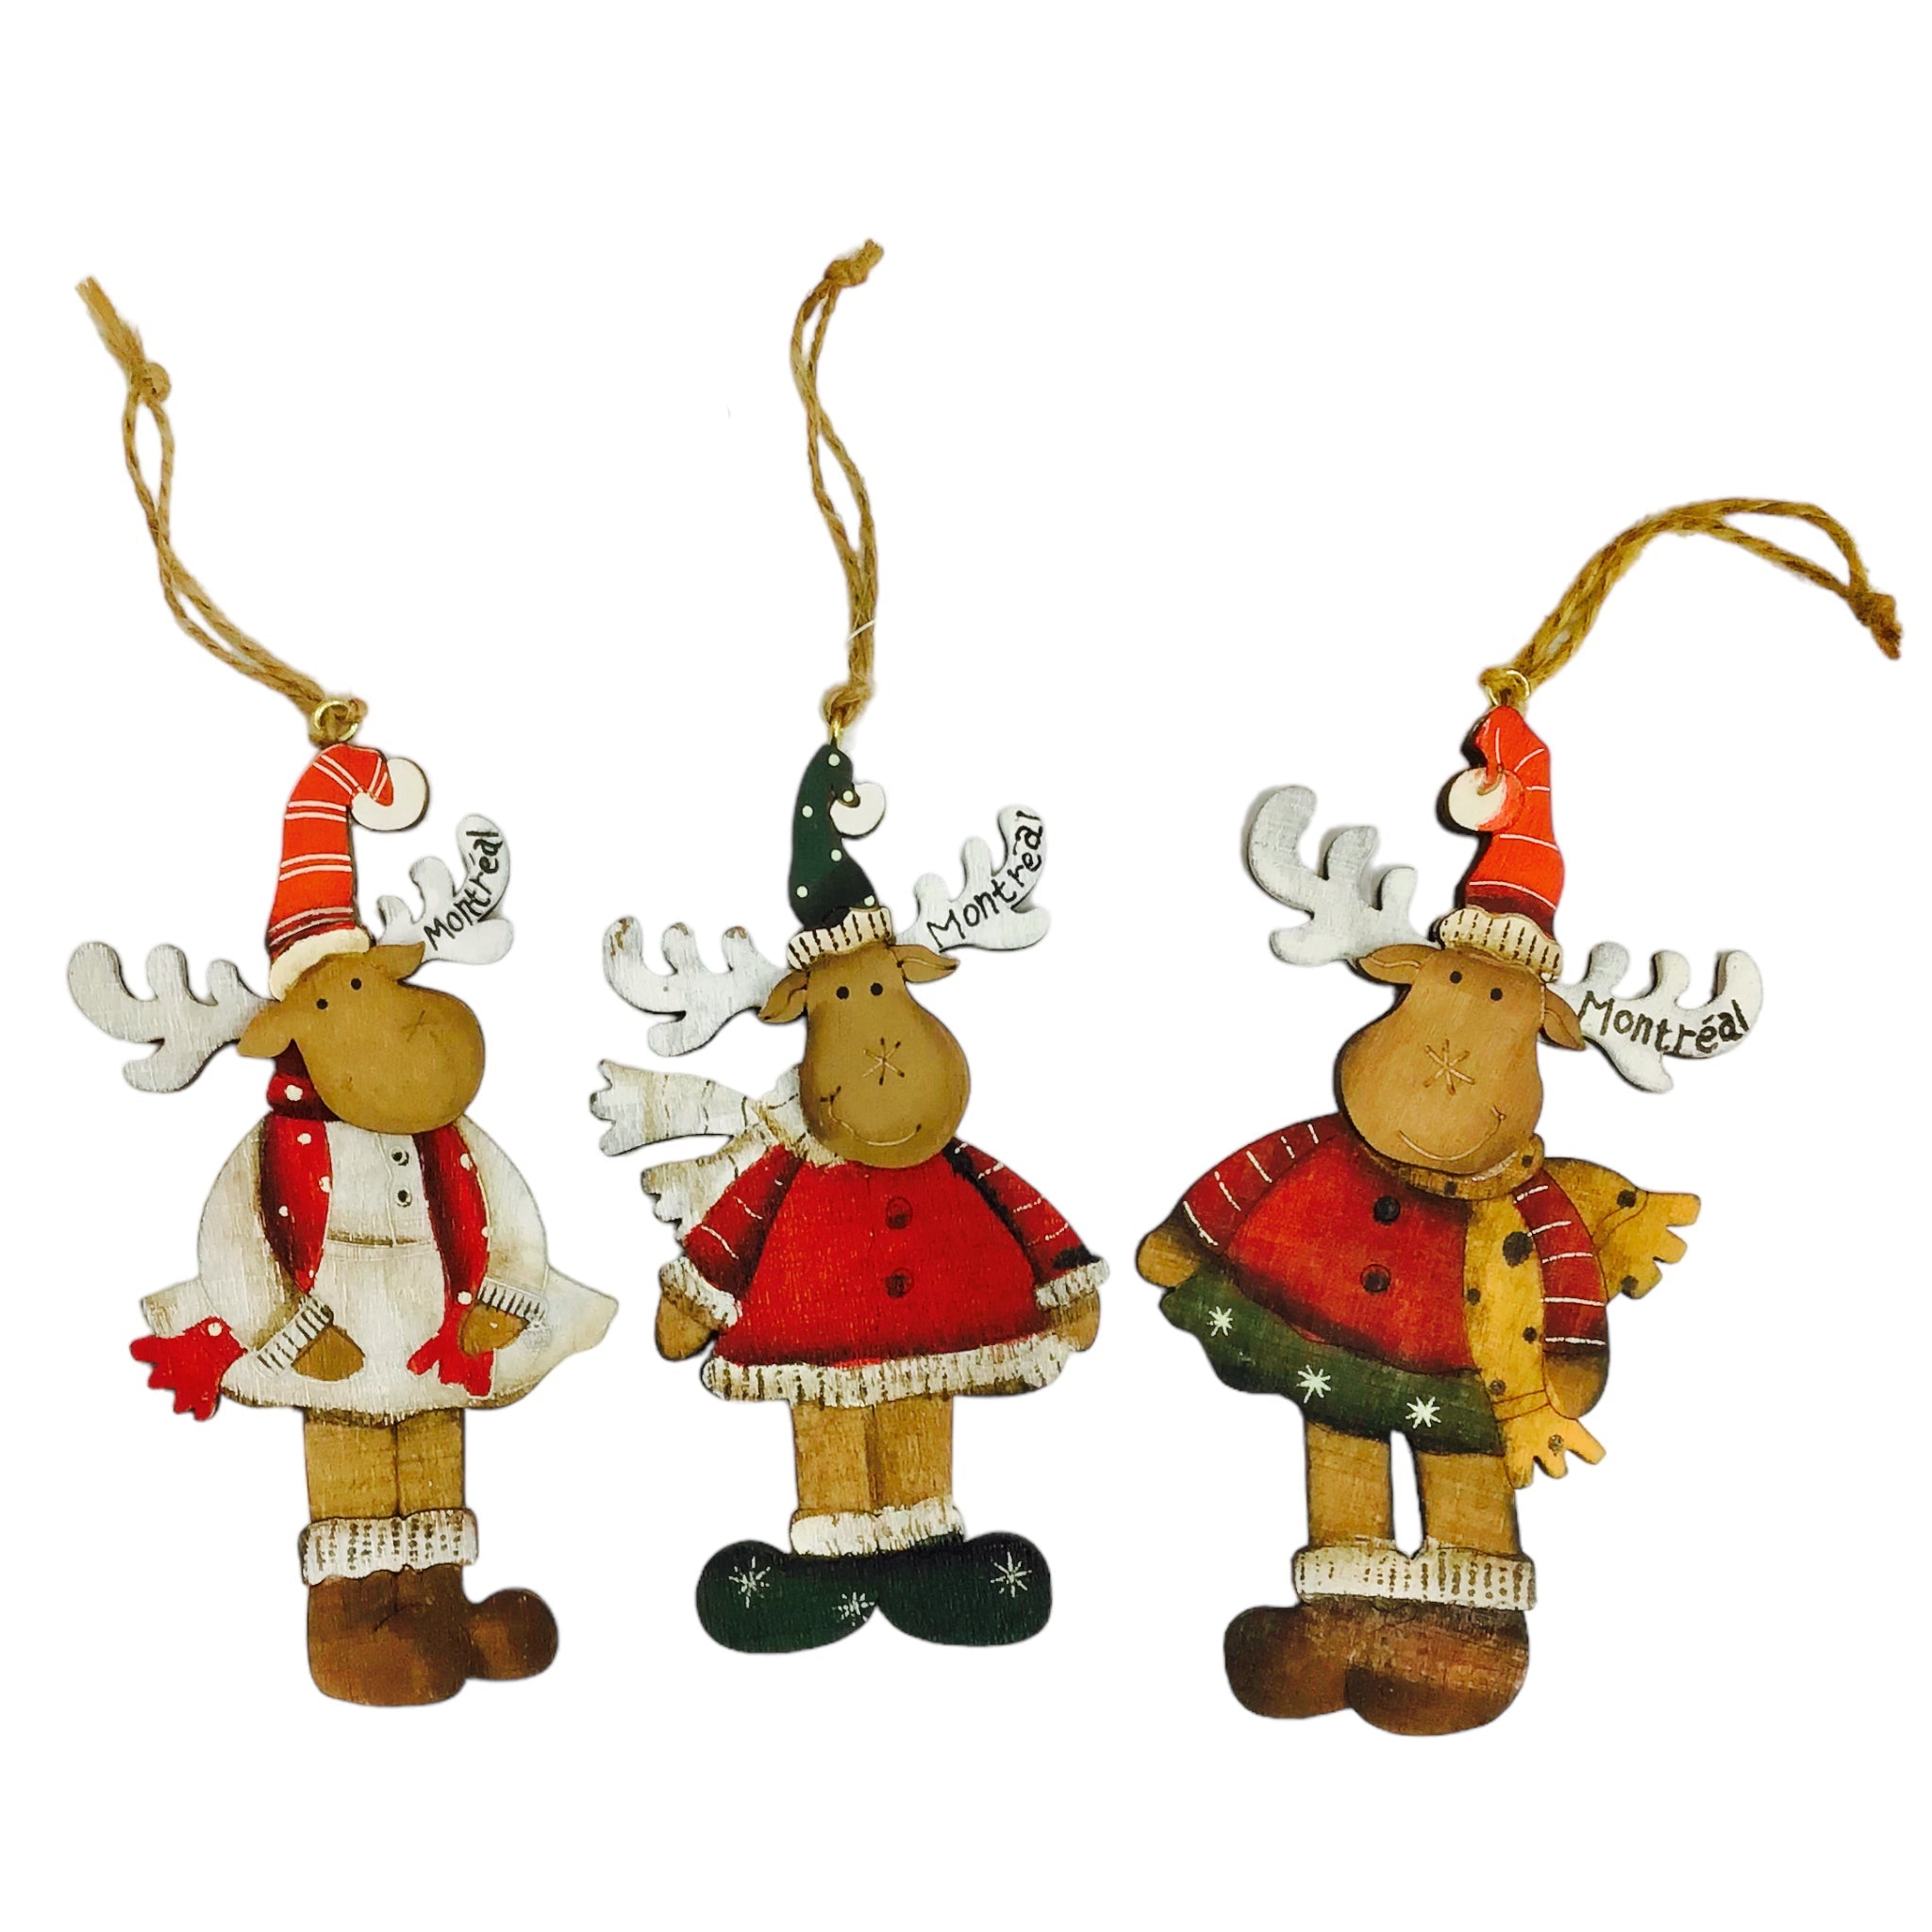 Montreal Moose Christmas wooden Ornament Souvenir